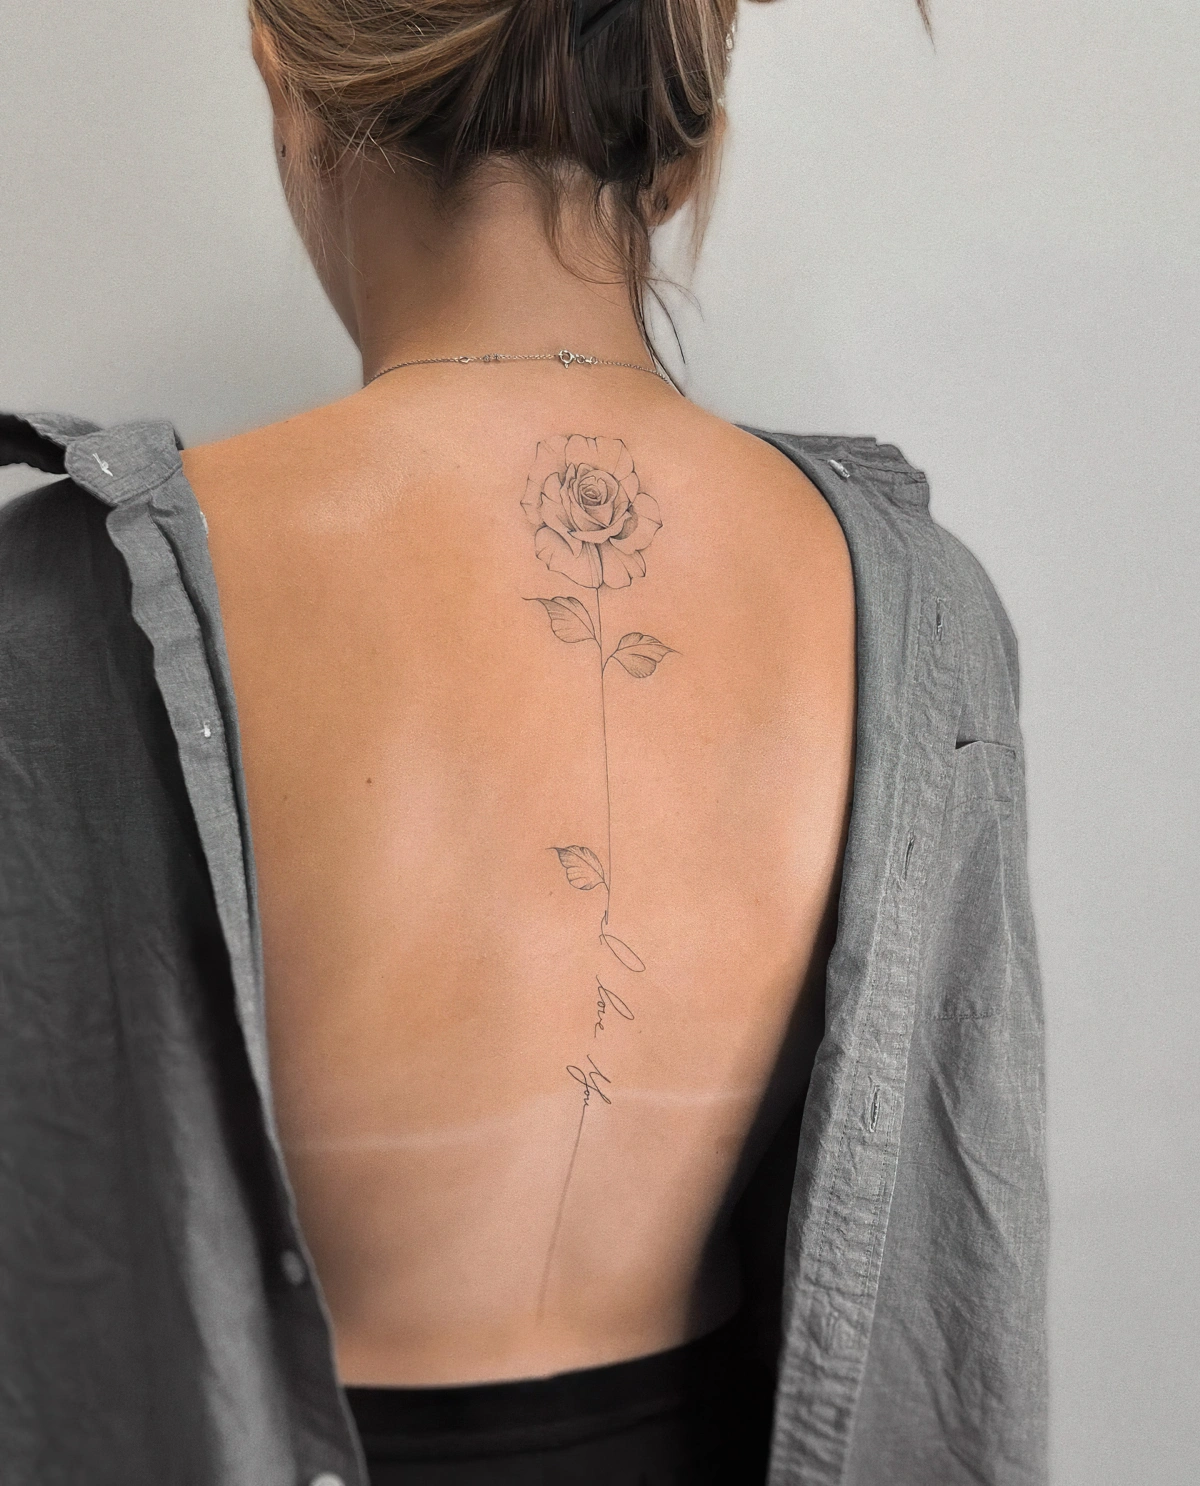 tatouage fin femme dessin rose delicat tige longue petales feuilles ecriture